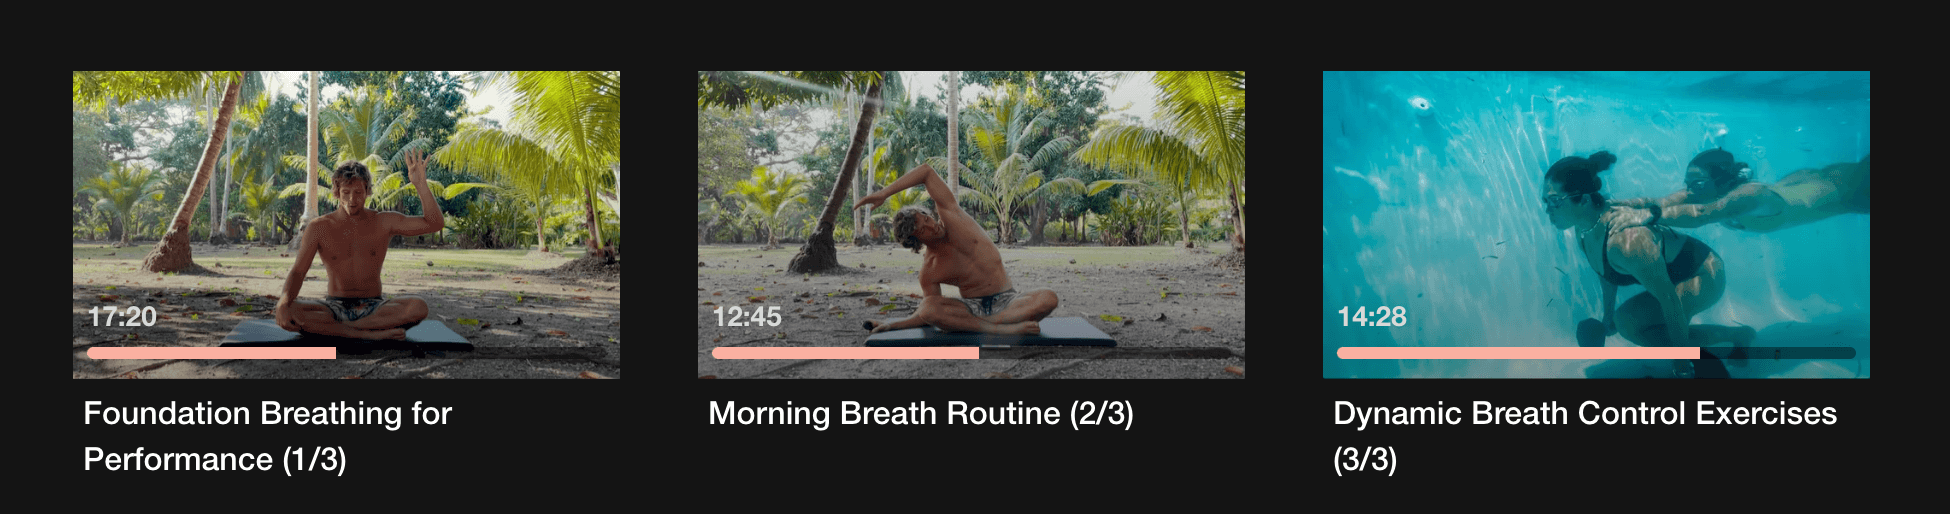 breathing techniques